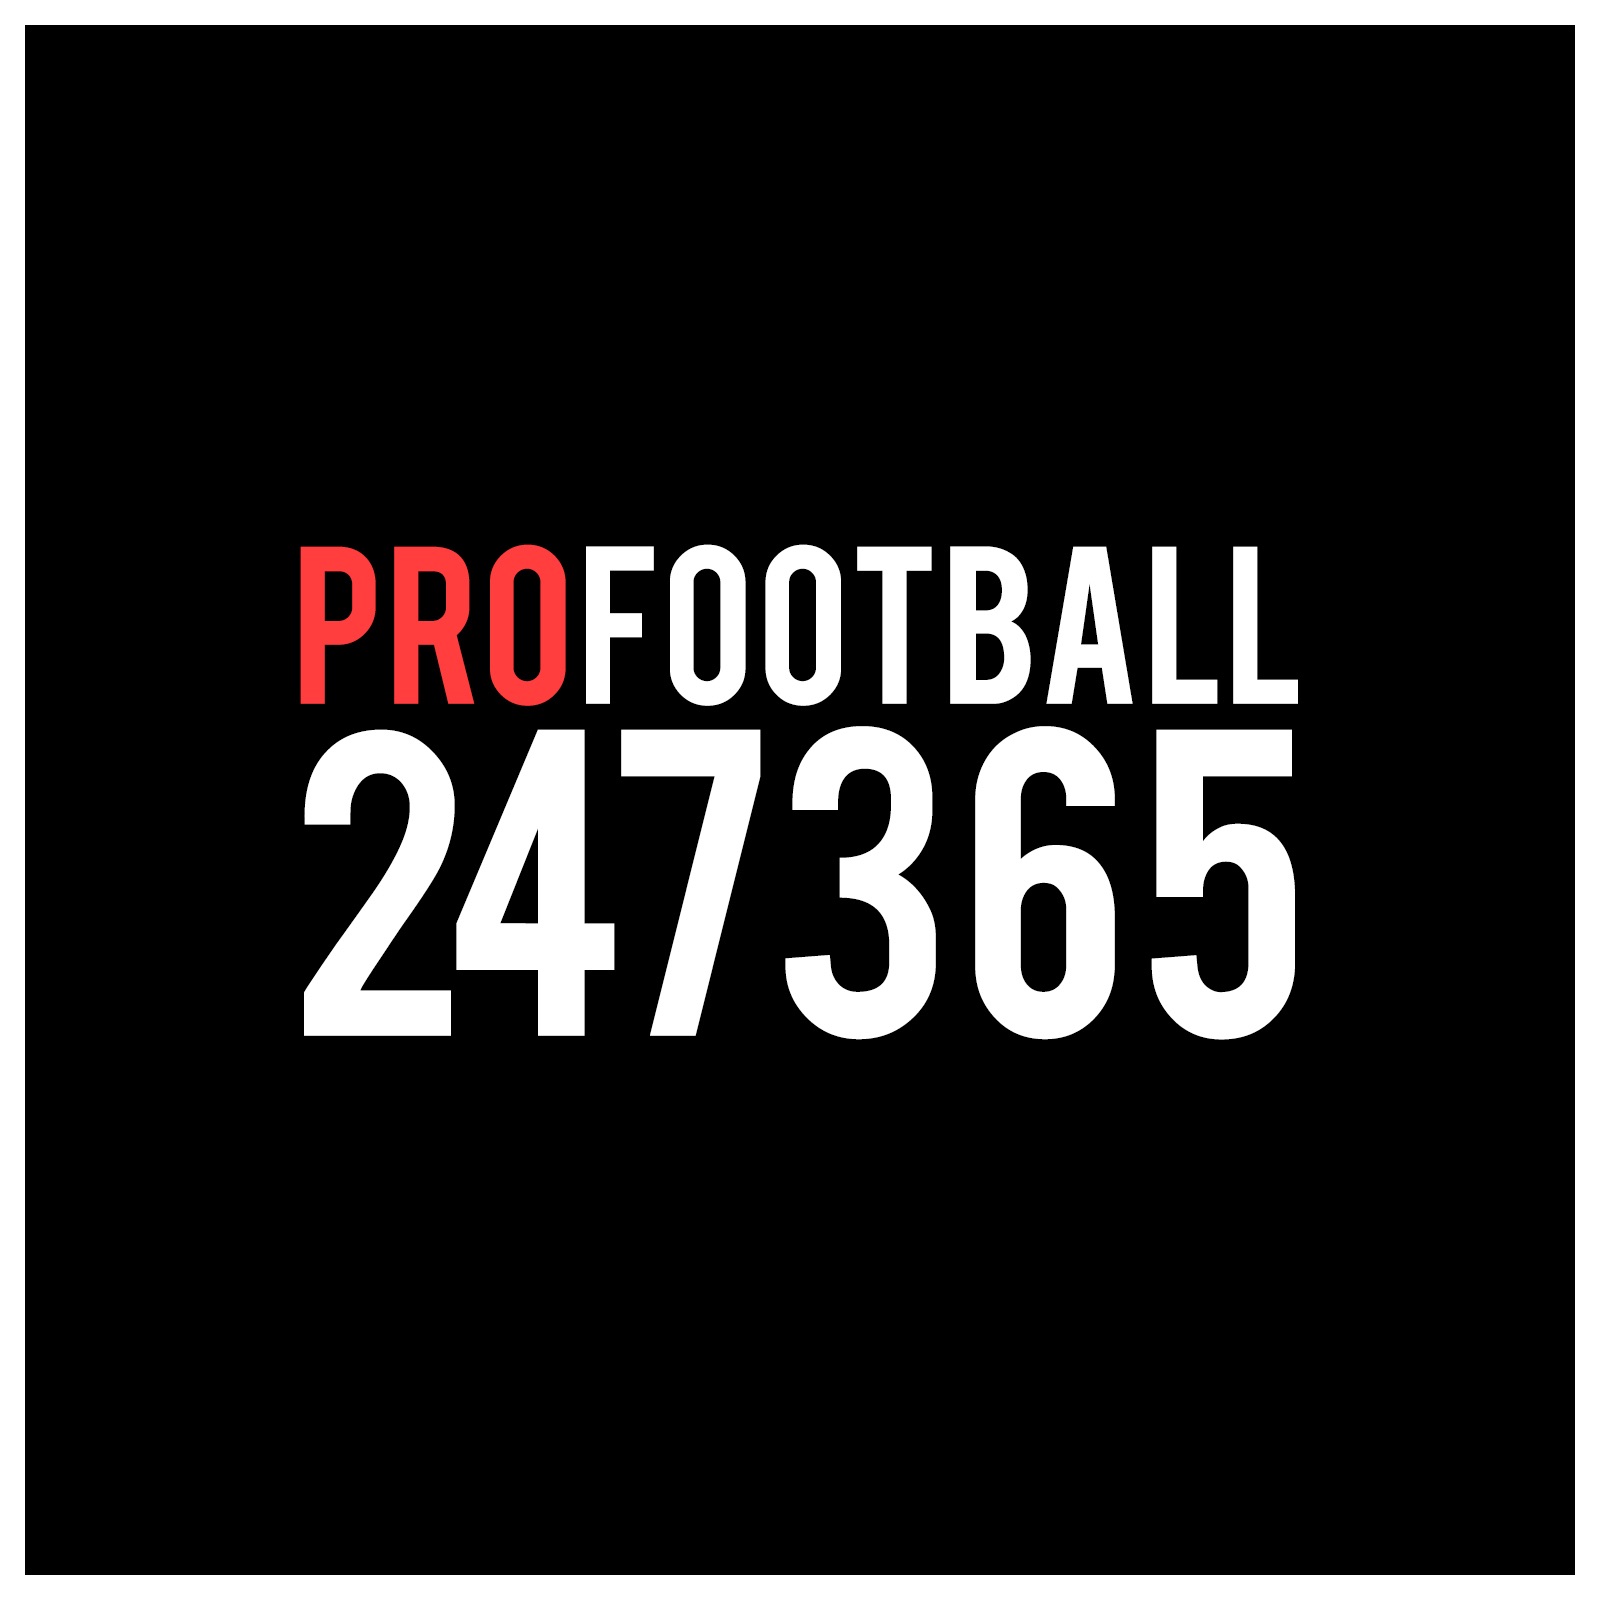 ProFootball247365 Podcast